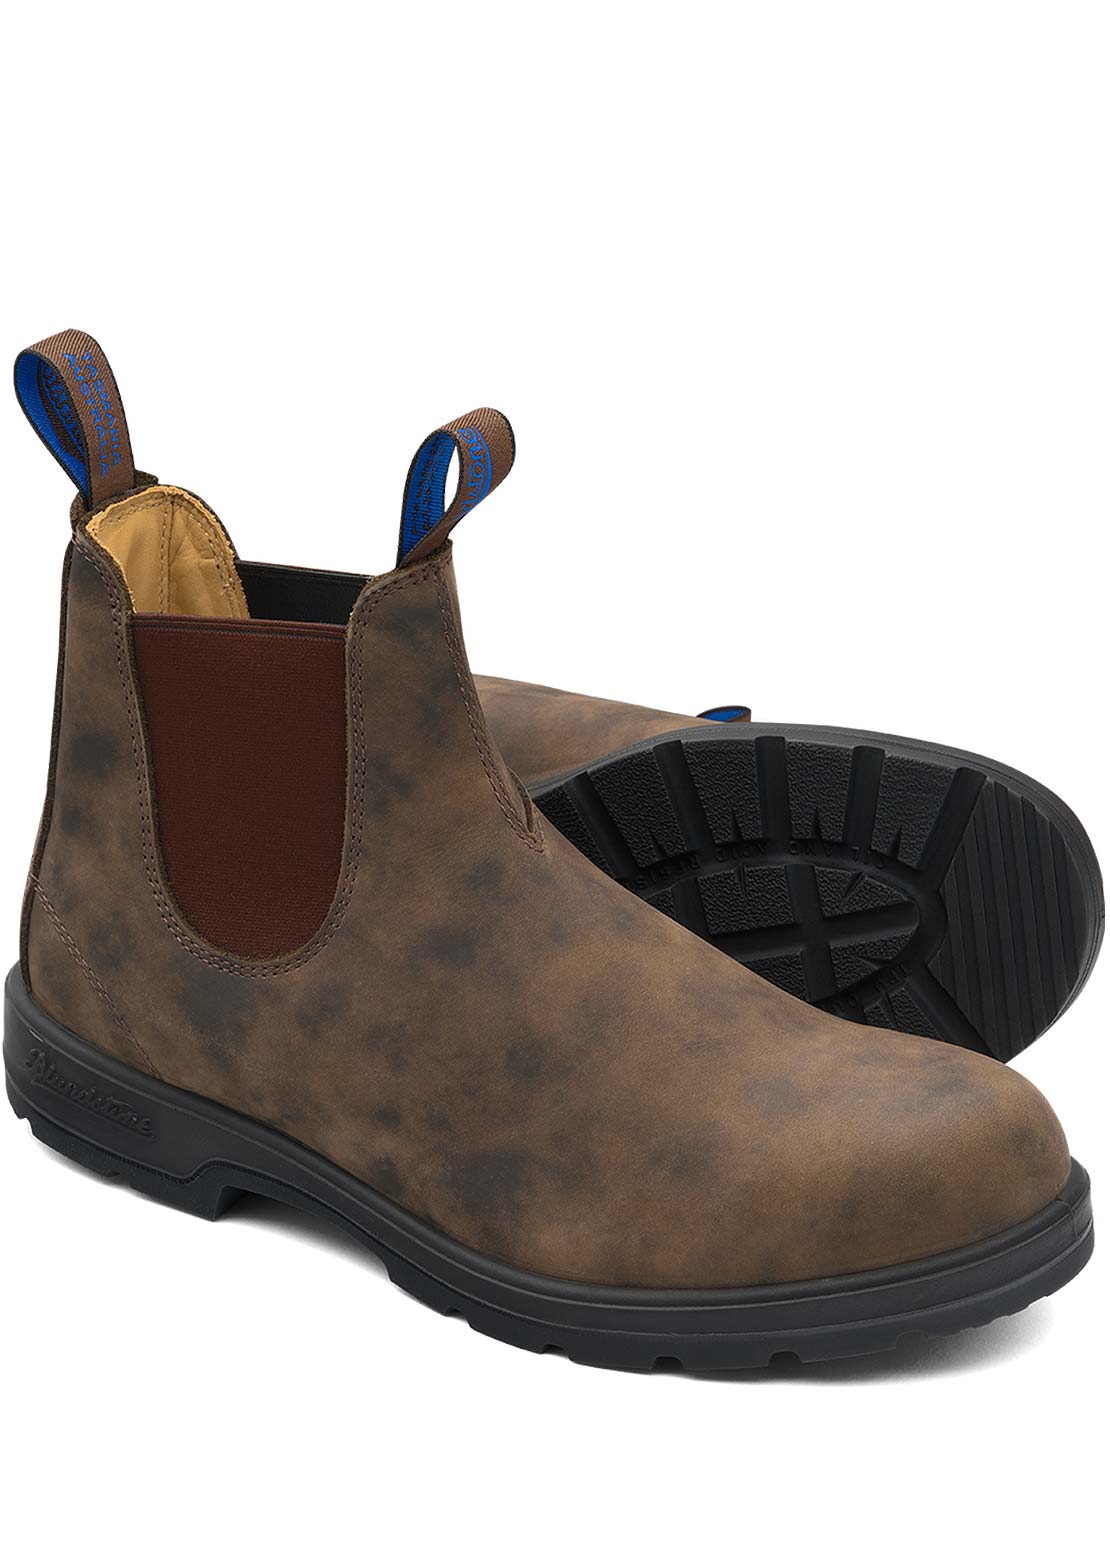 Blundstone Original 584 Winter Boots Rustic Brown